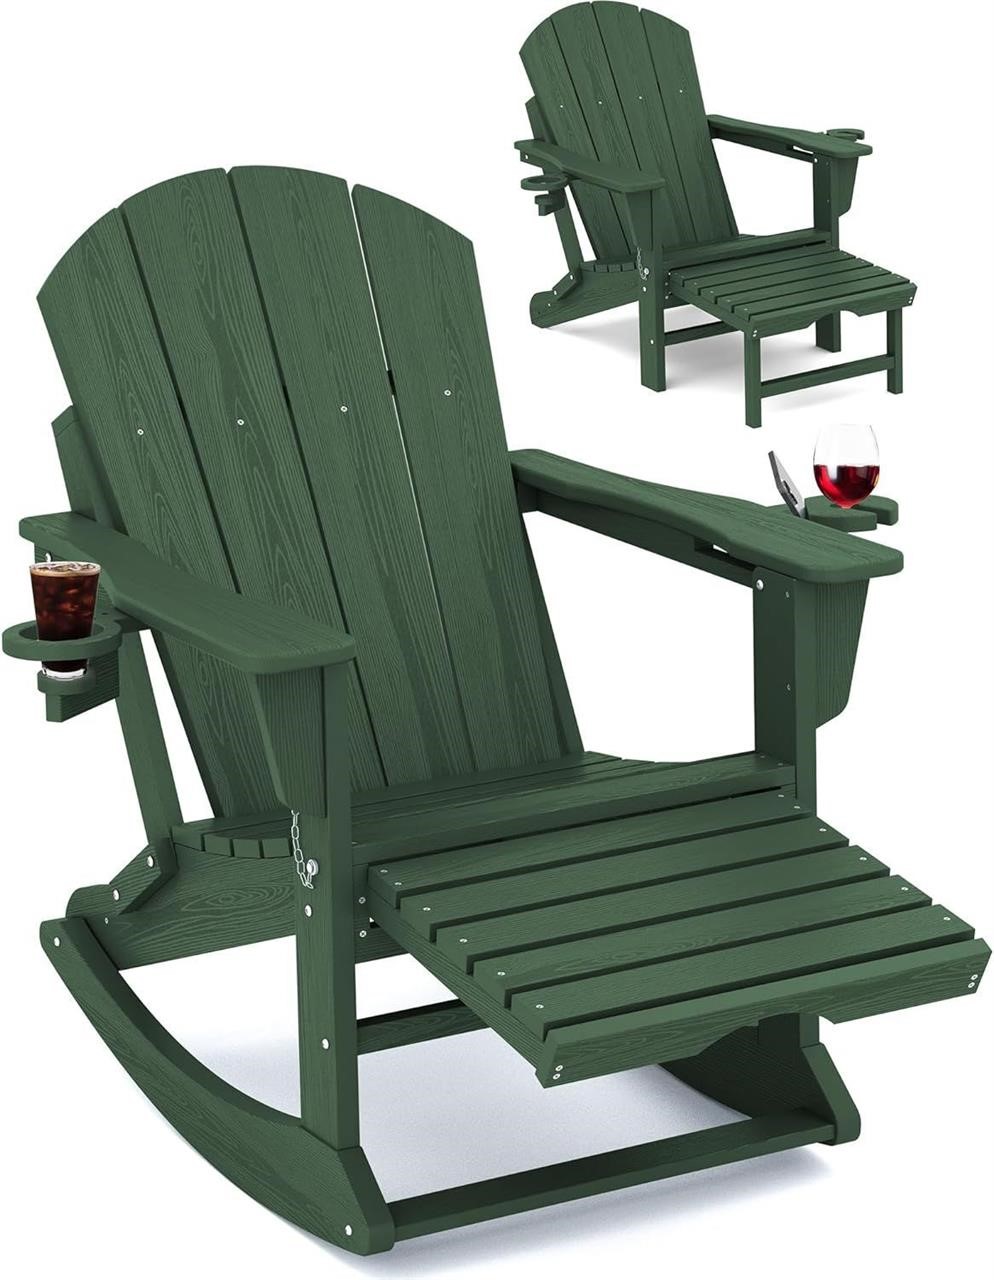 KINGYES Adirondack Chair;Retractable Ottoman(GREY)